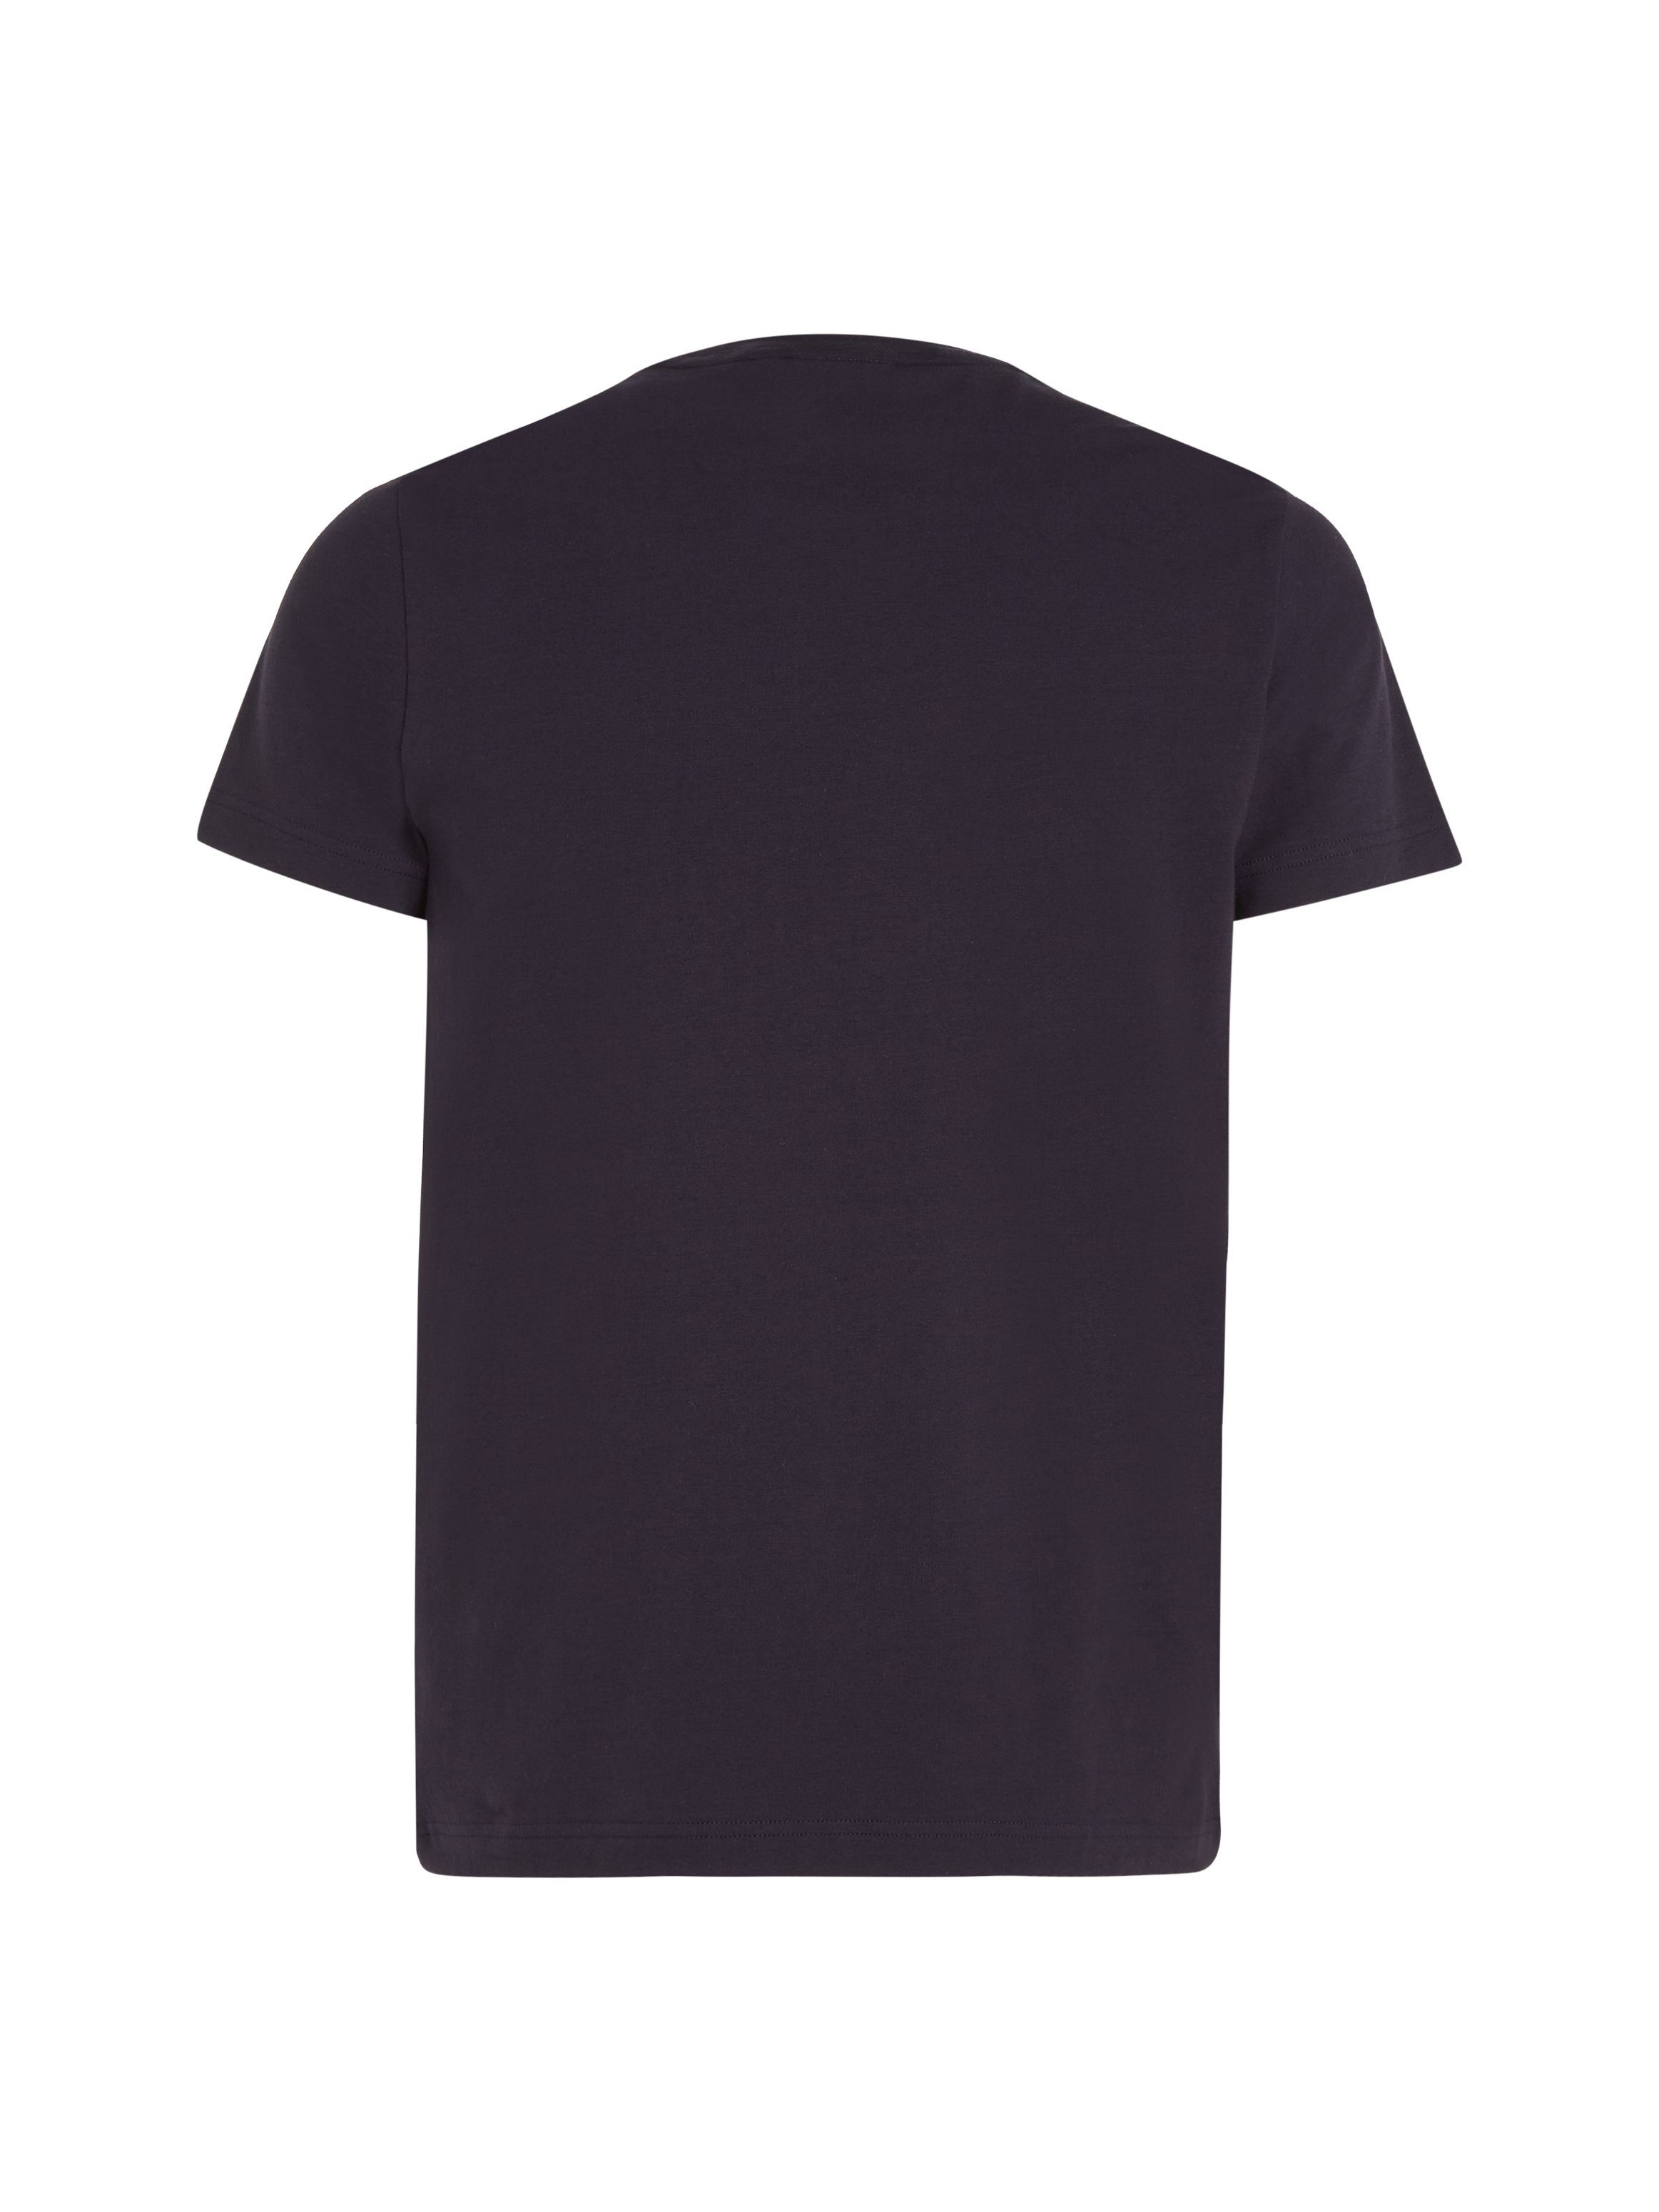 Calvin Klein T-Shirt STRETCH SLIM T-SHIRT Sky Night FIT